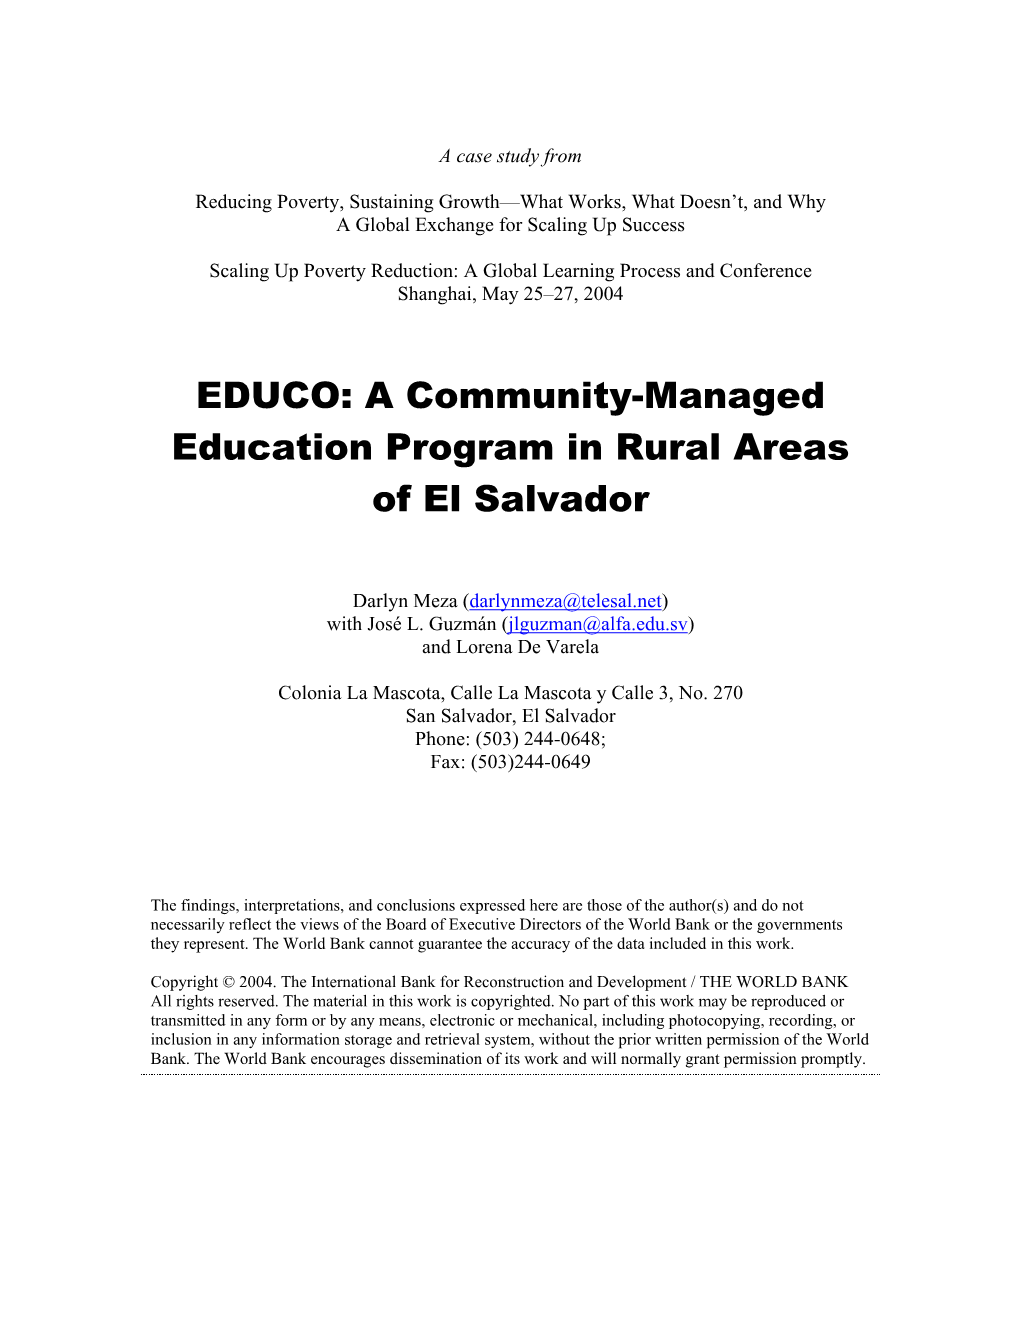 EDUCO: a Community-Managed Education Program in Rural Areas of El Salvador